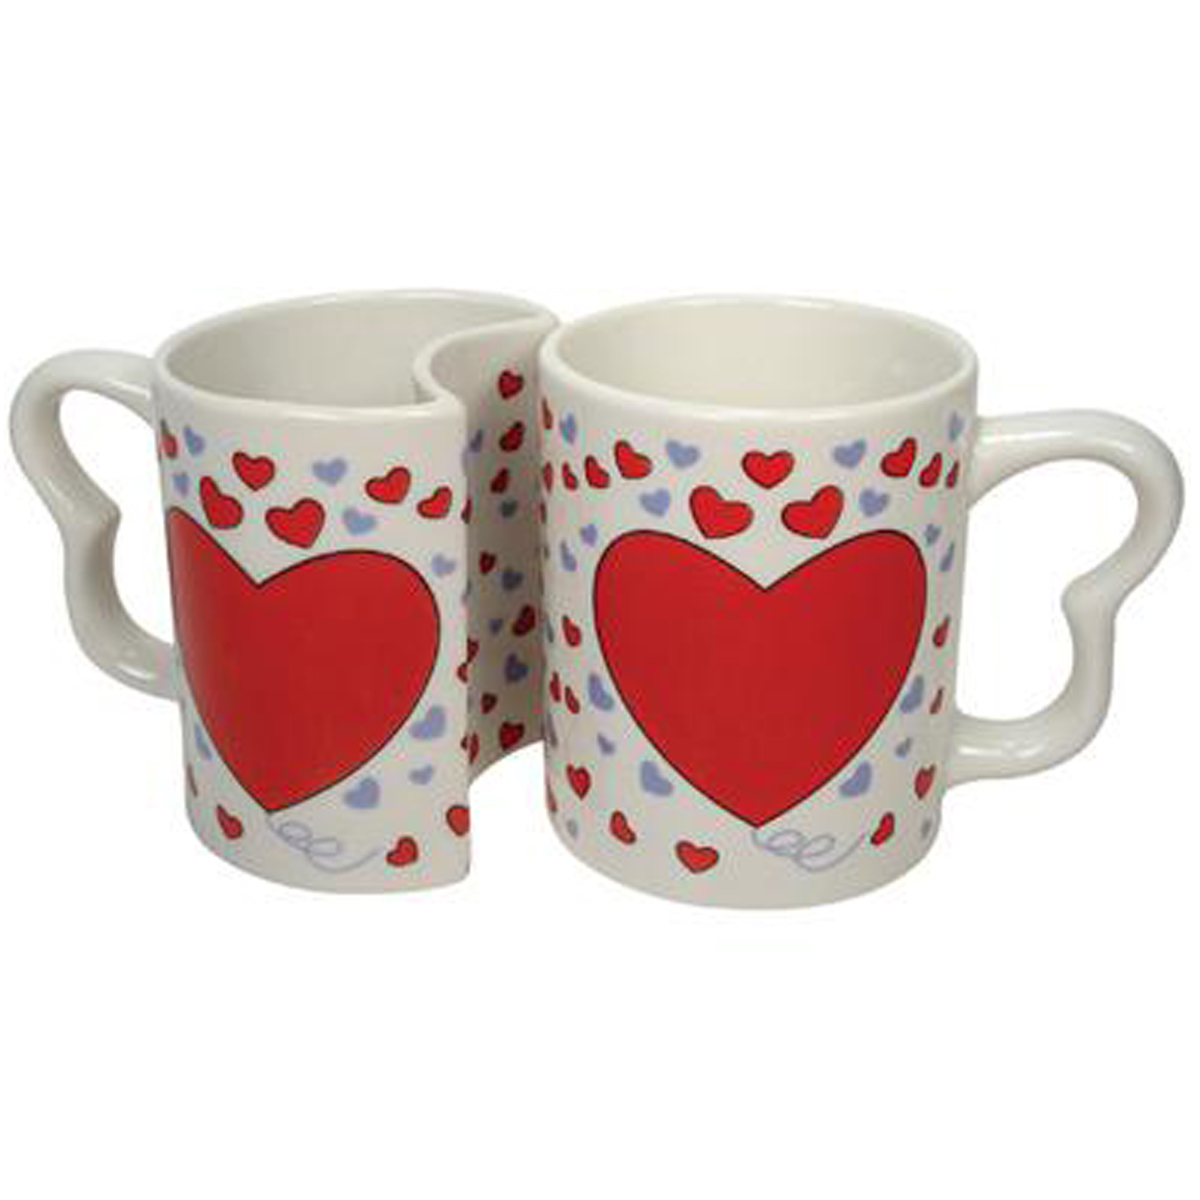 White lover ceramic mug